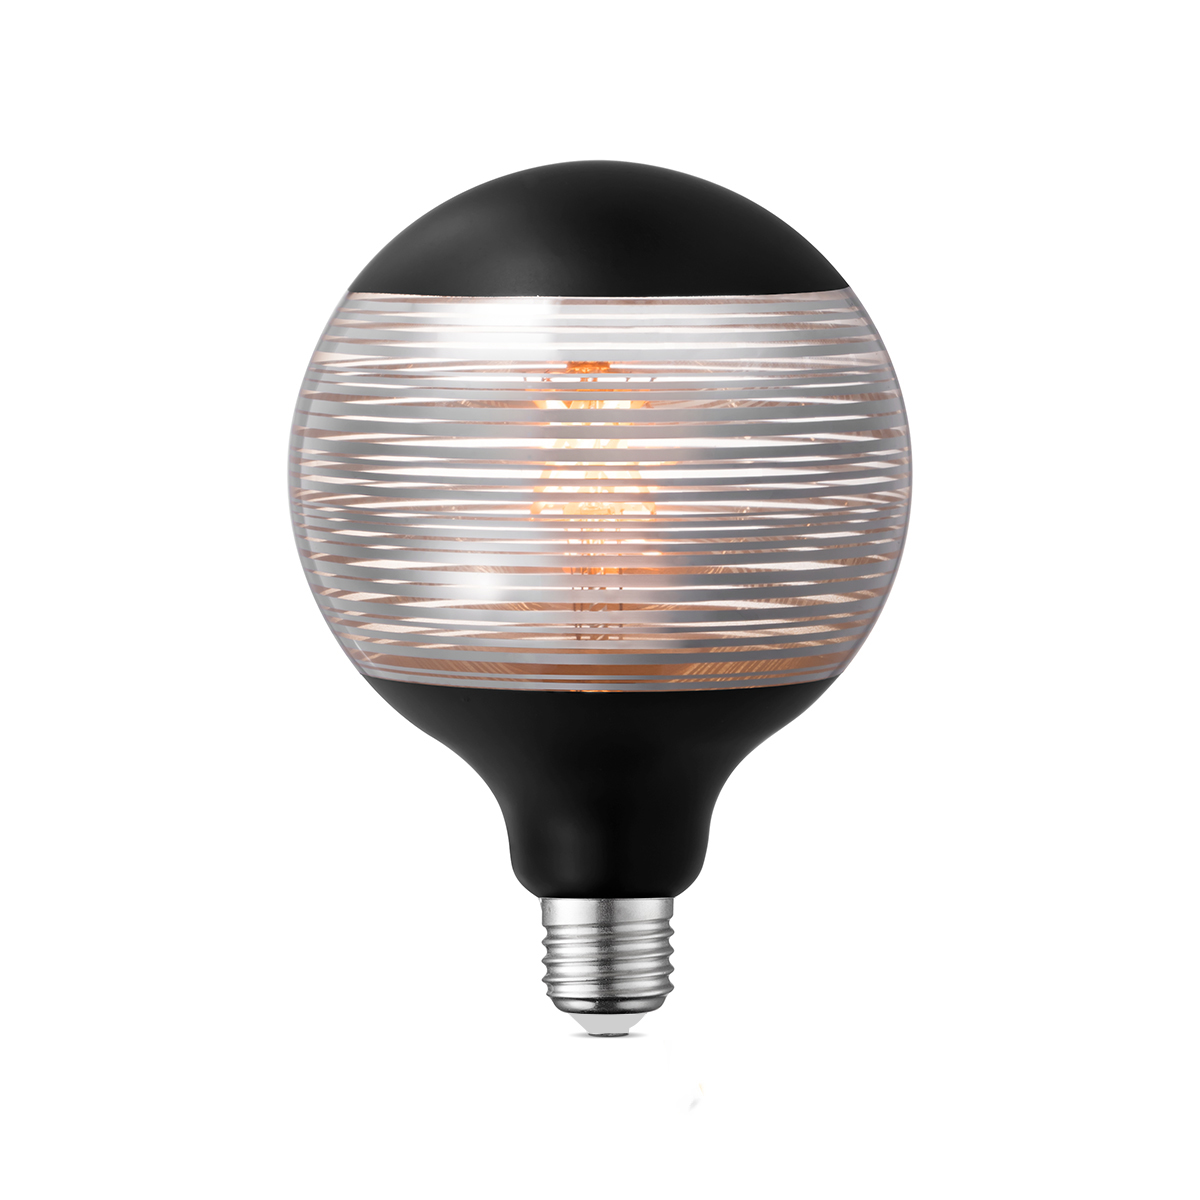 Tangla lighting - TLB-8121-04BS - LED Light Bulb Single Spiral filament - G125 4W graphic design - medium - fade - dimmable - E27